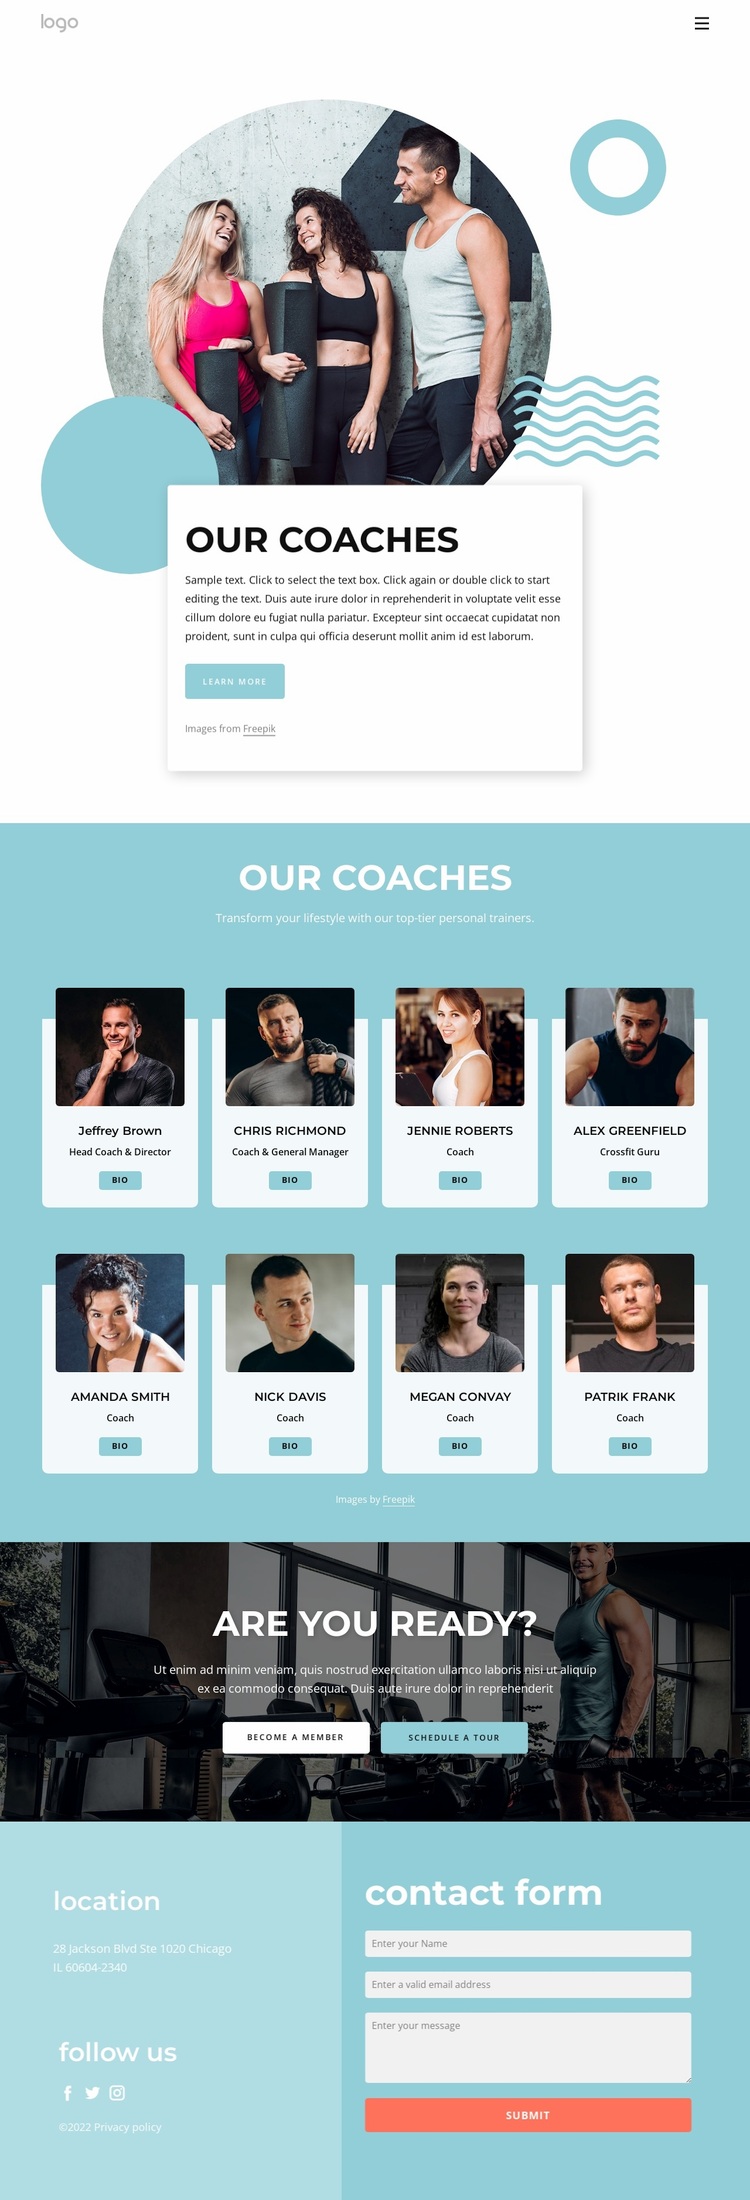 Our Coaches Website Design